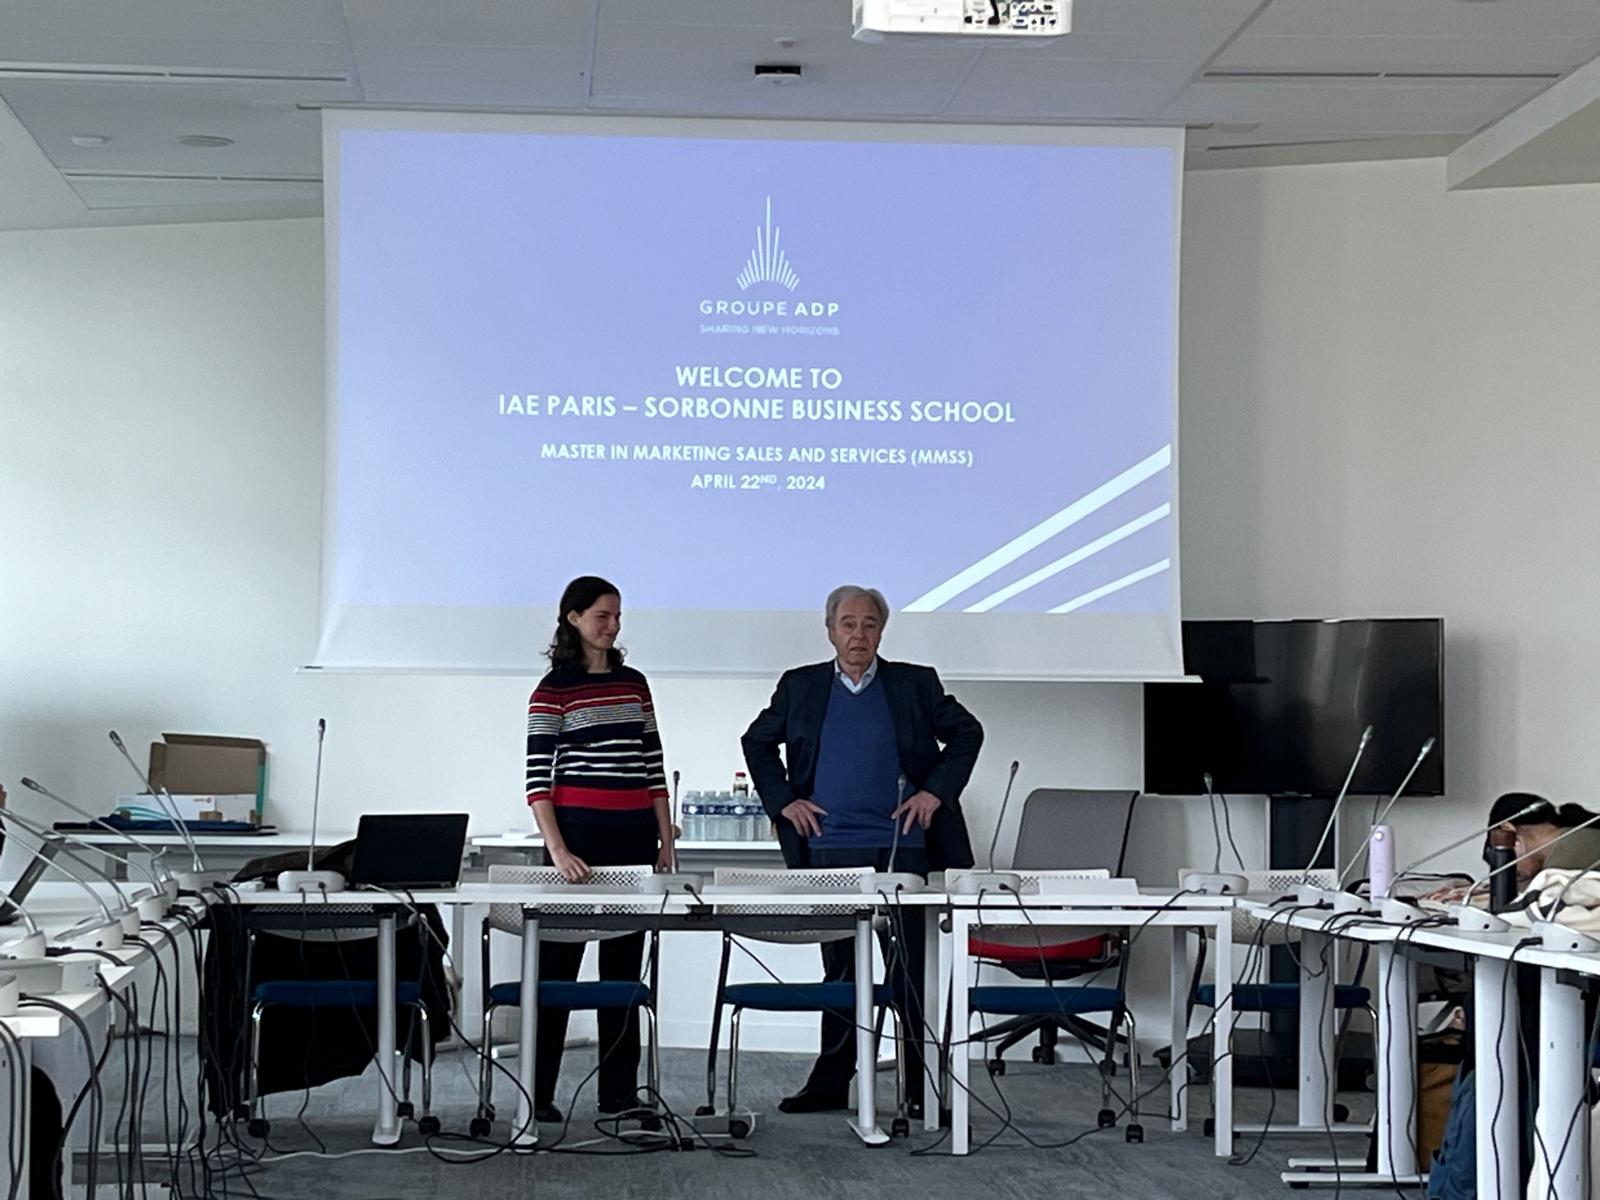 Jean-Pierre HELFER in front of a slide of the IAE Paris-Sorbonne and the Aéroport de Paris group